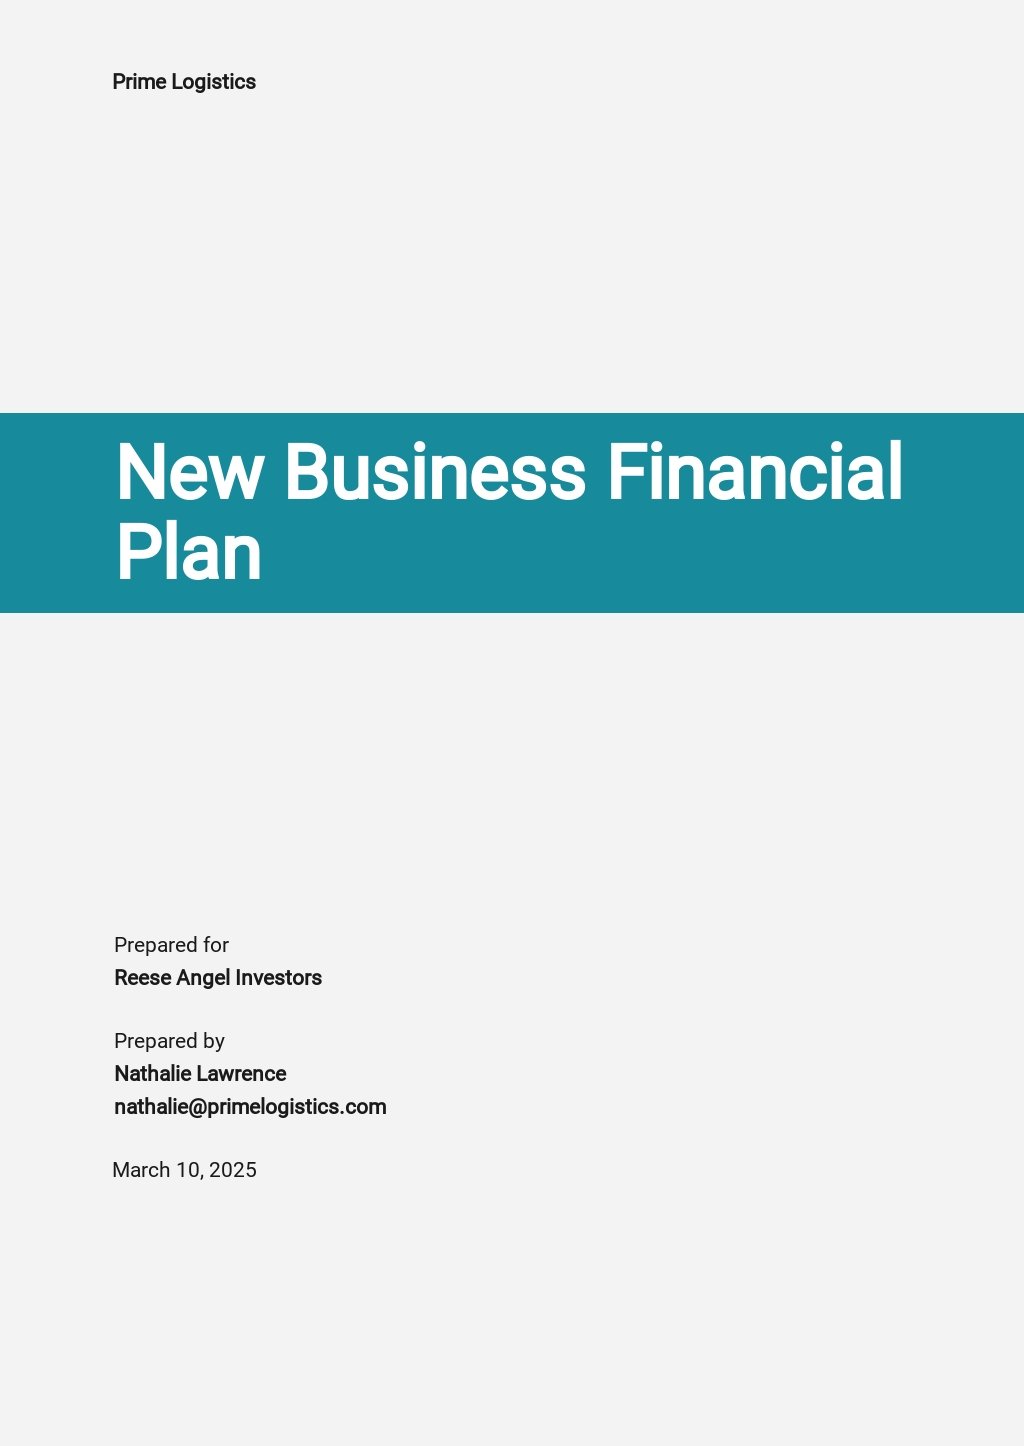 New Business Financial Plan Template